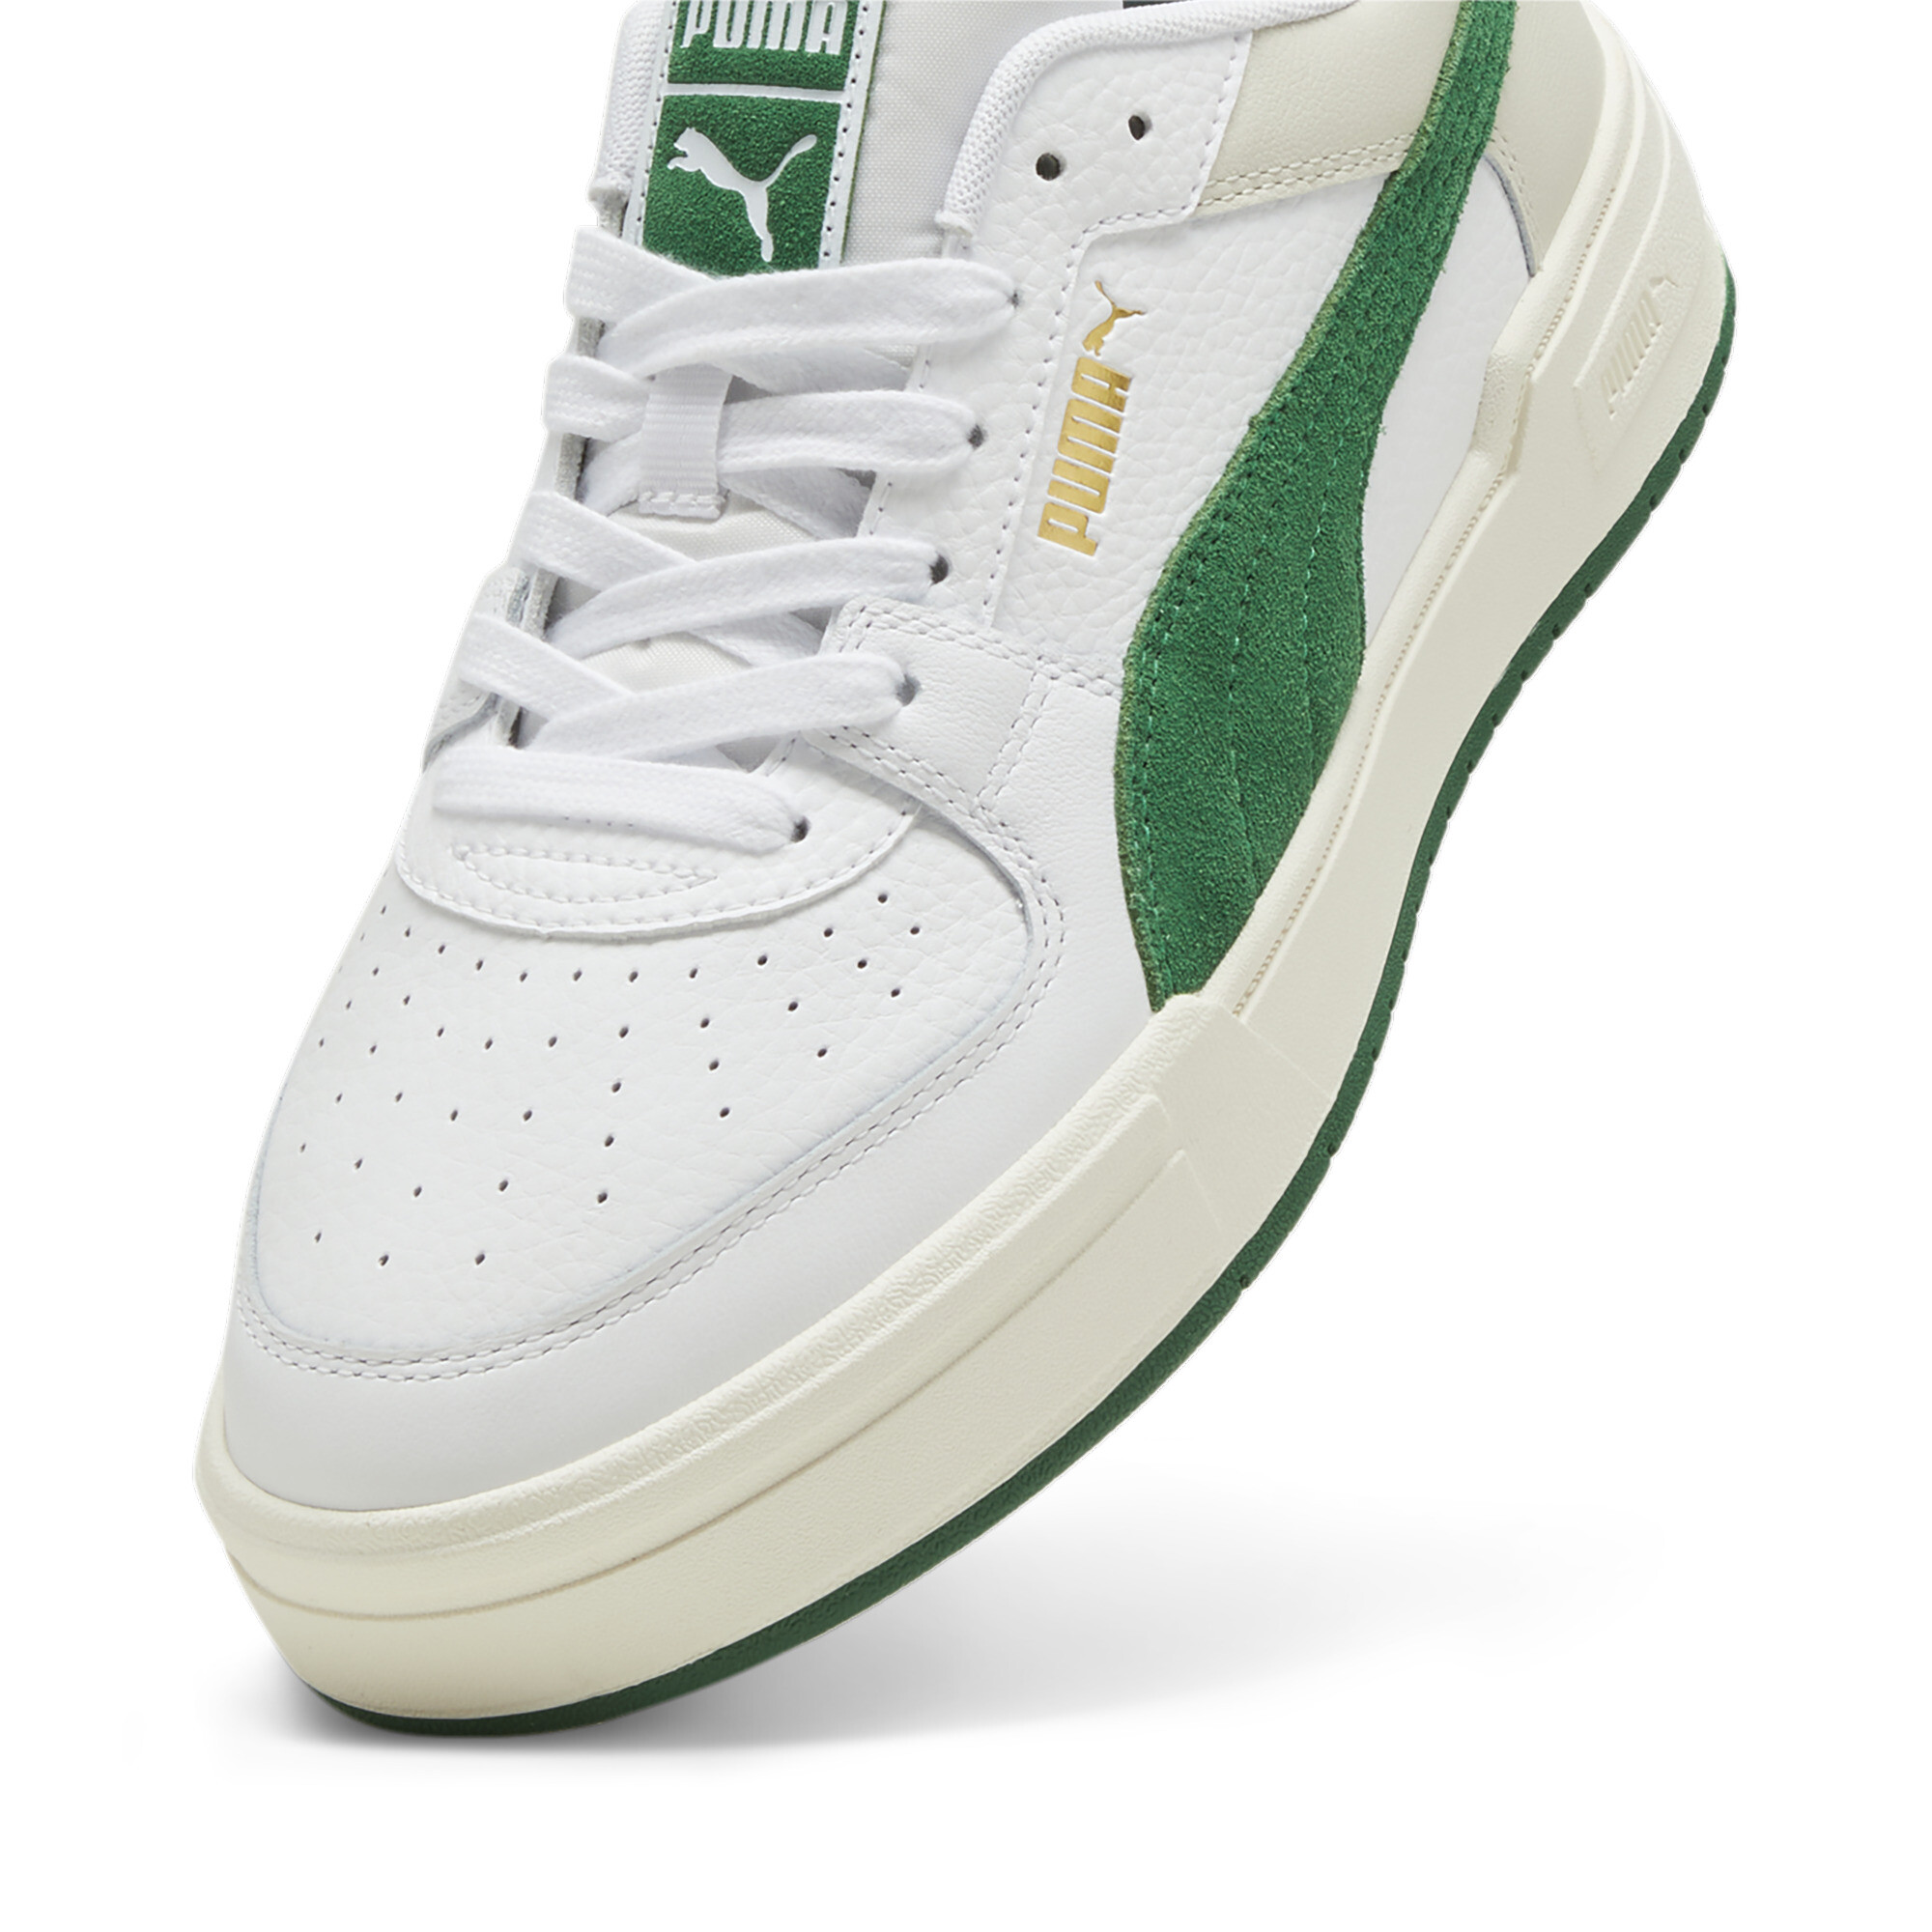 Men's PUMA CA Pro Suede FS Sneakers In White, Size EU 43